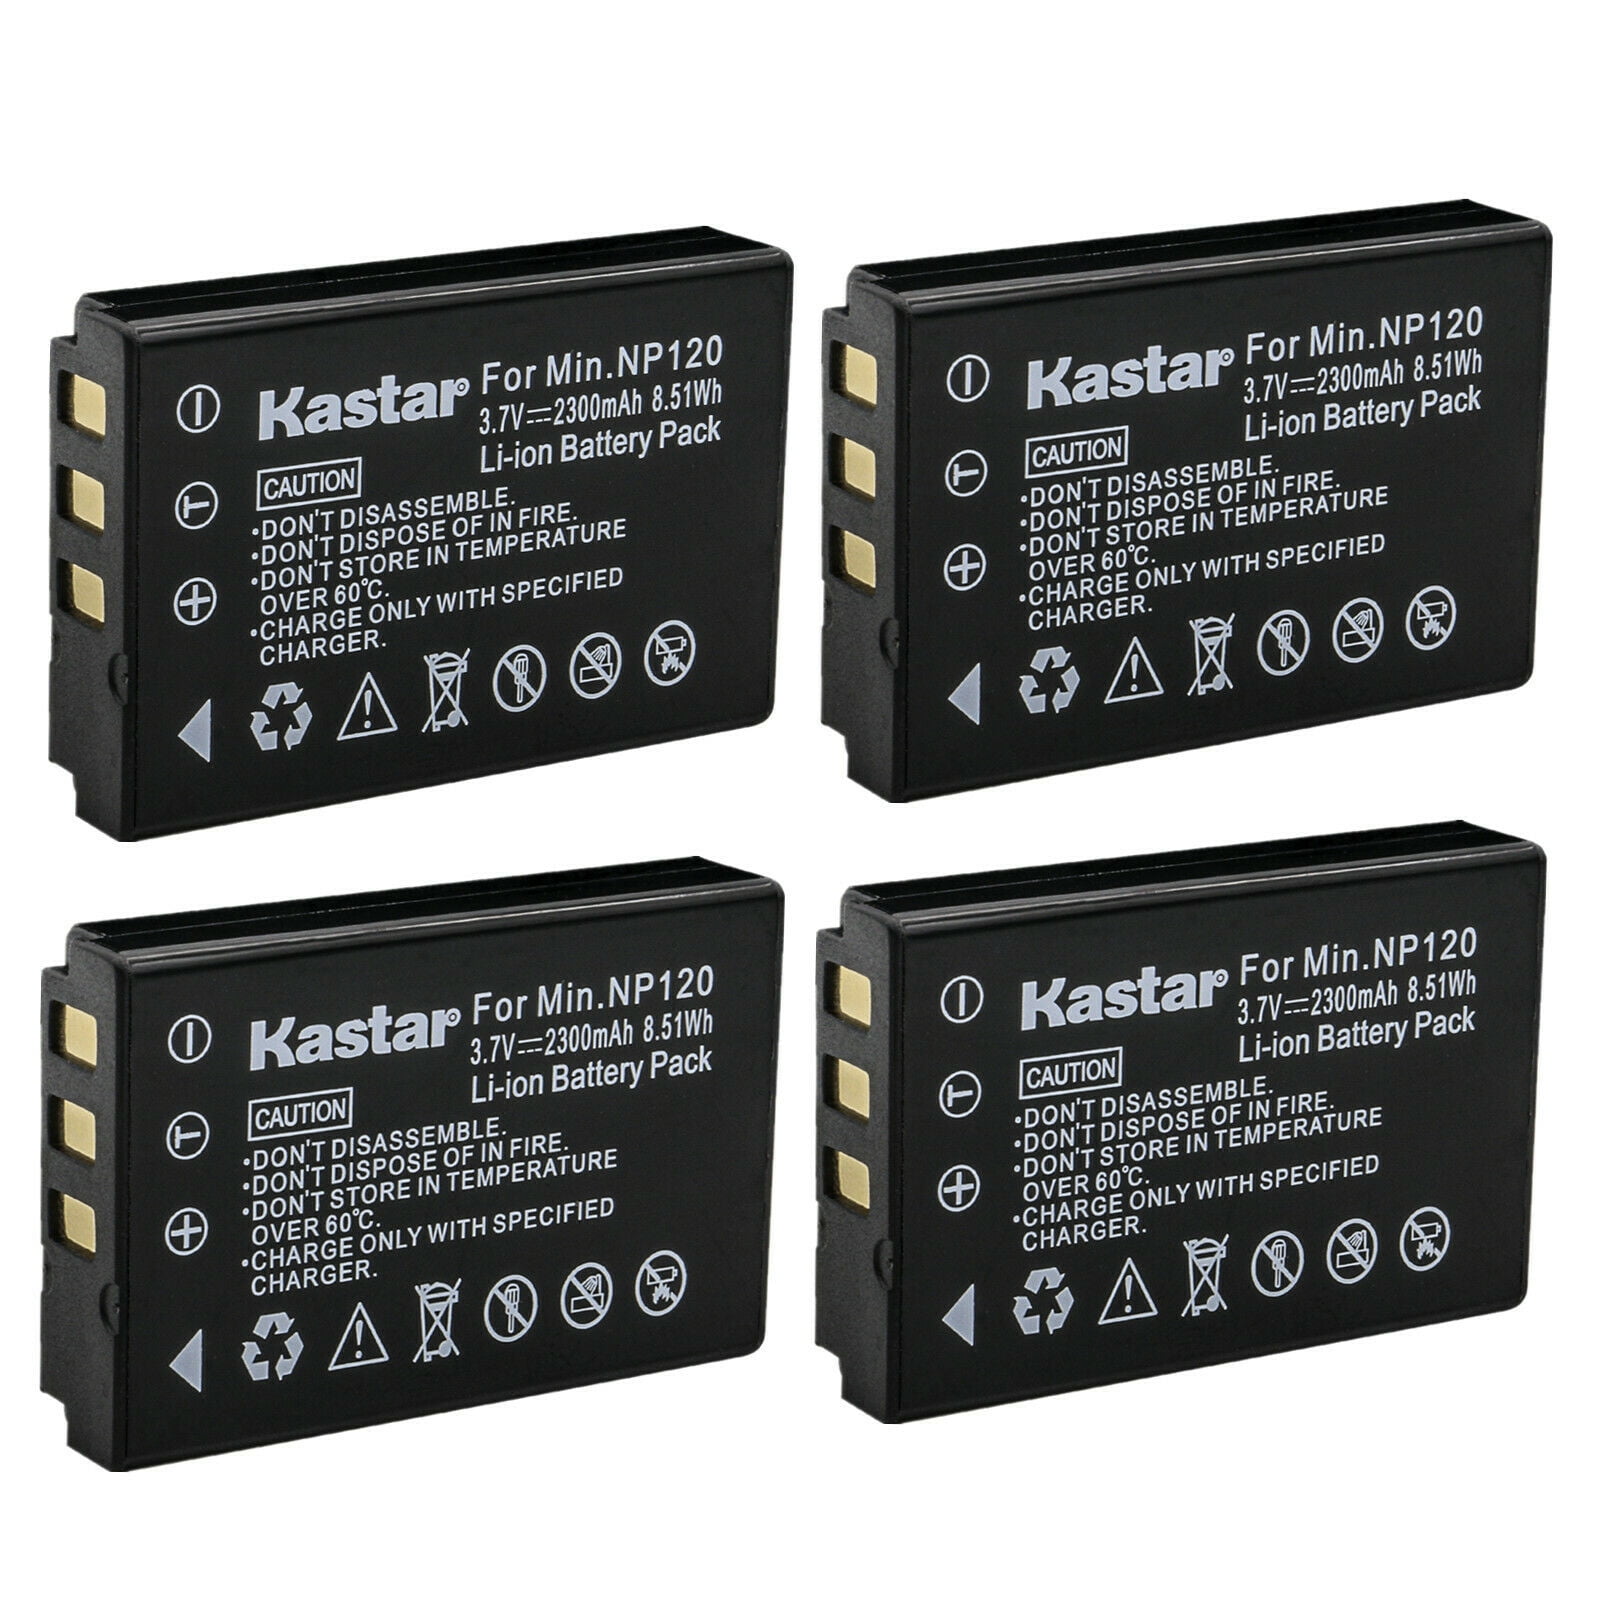  Battery Pack for Kodak LB-080 and PIXPRO SP360 4K, SP1-YL3,  SP1 HD Digital Action Camera : Electronics